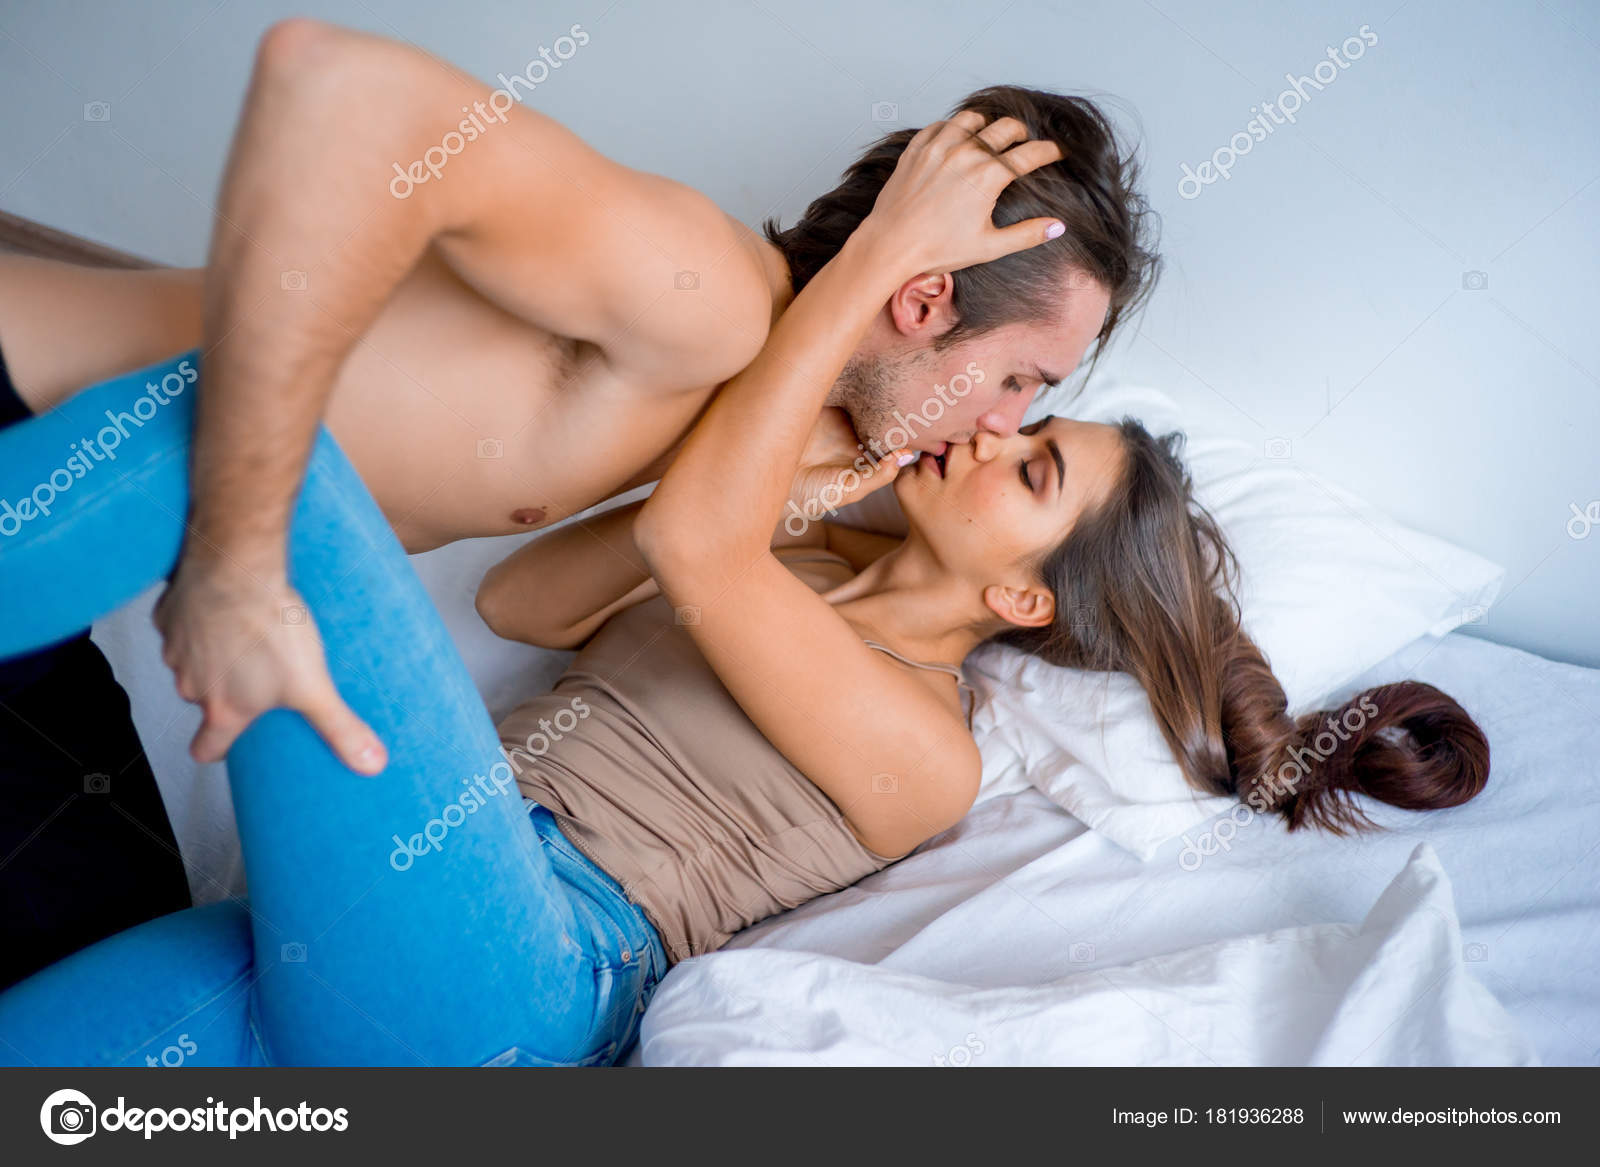 married couples having sex free photos Porn Photos Hd